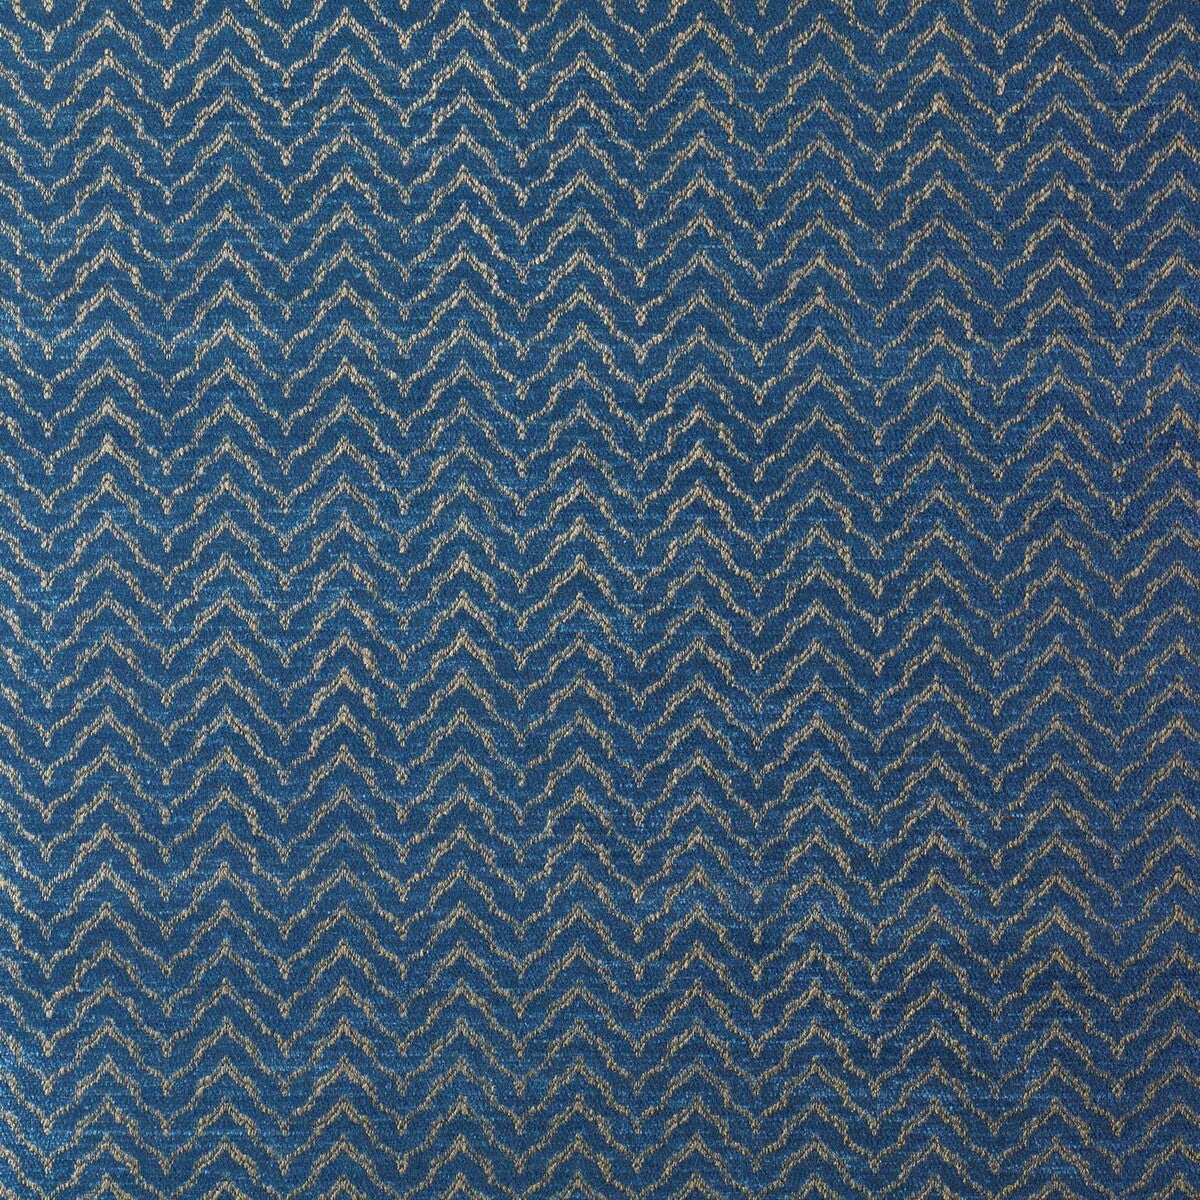 Sella fabric in azul color - pattern GDT5180.001.0 - by Gaston y Daniela in the Lorenzo Castillo II collection